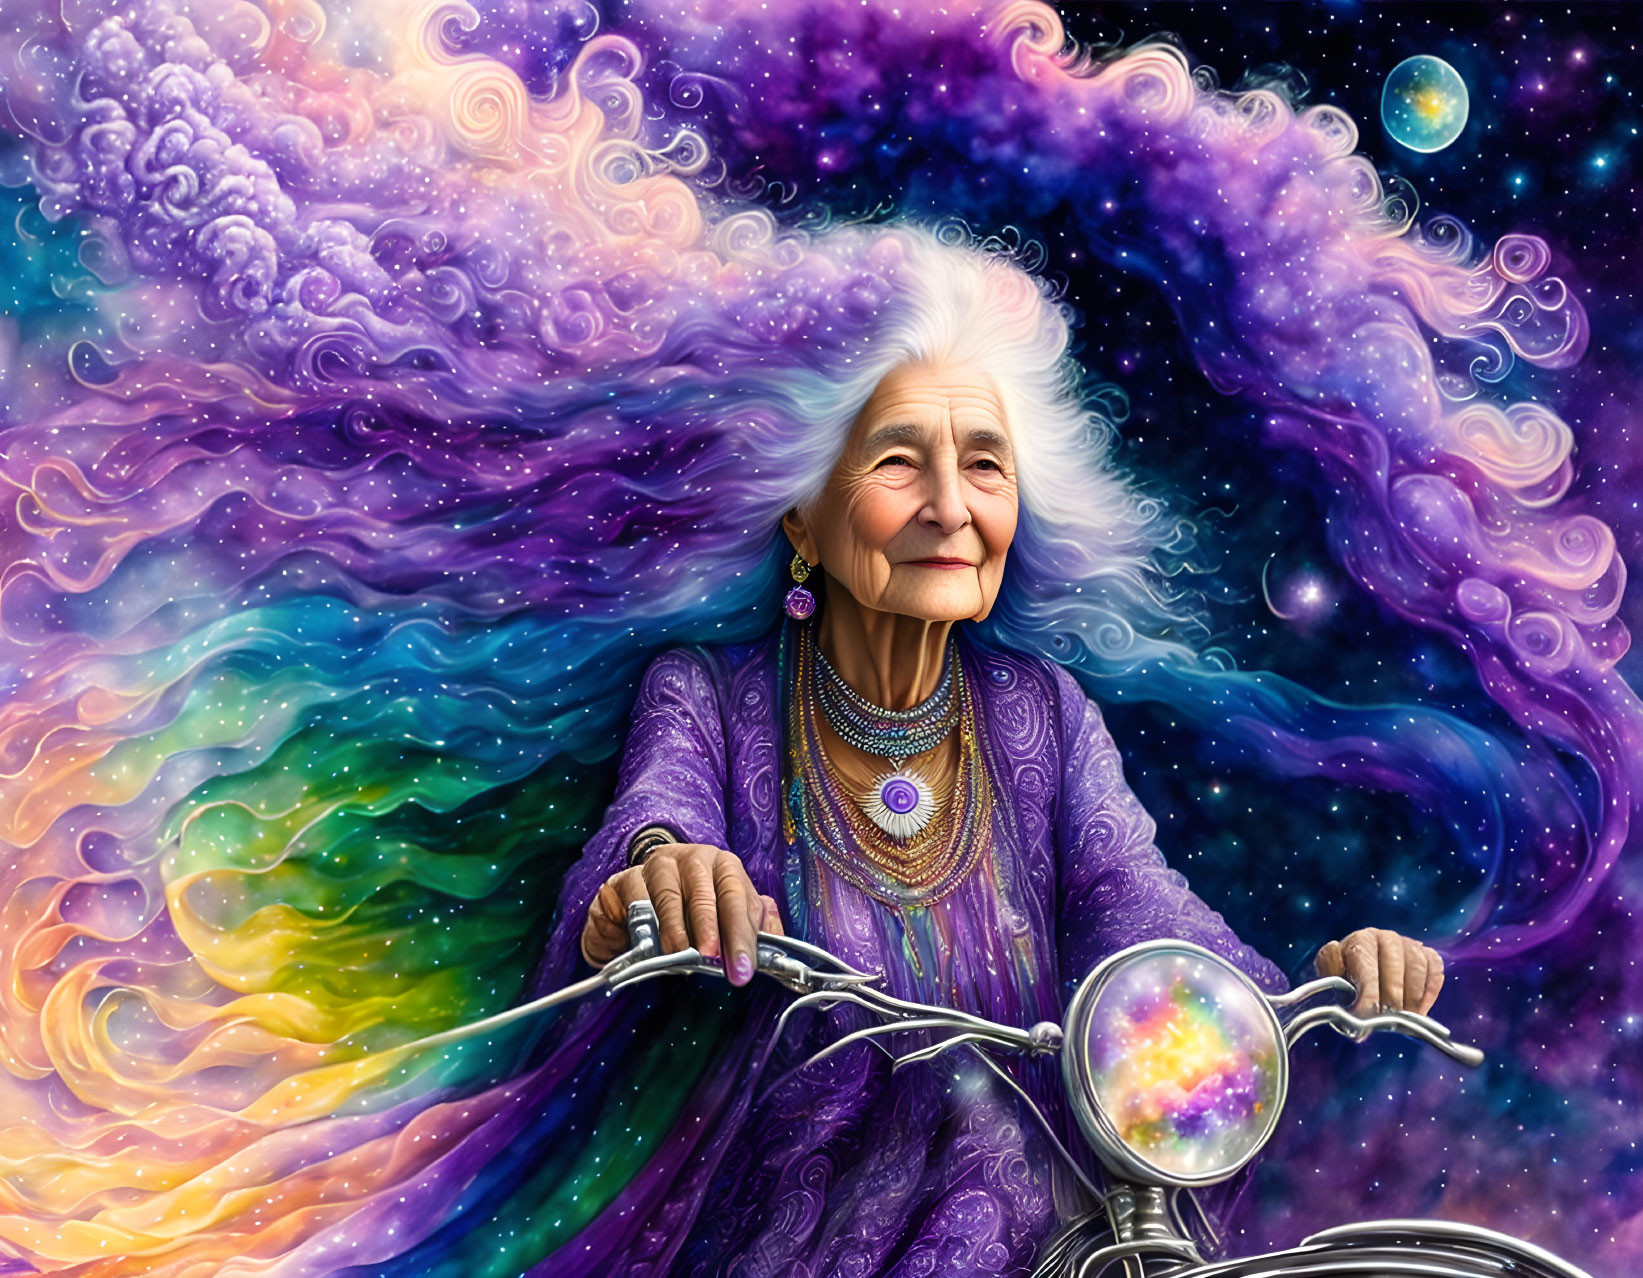 Old hippy lady riding a bike